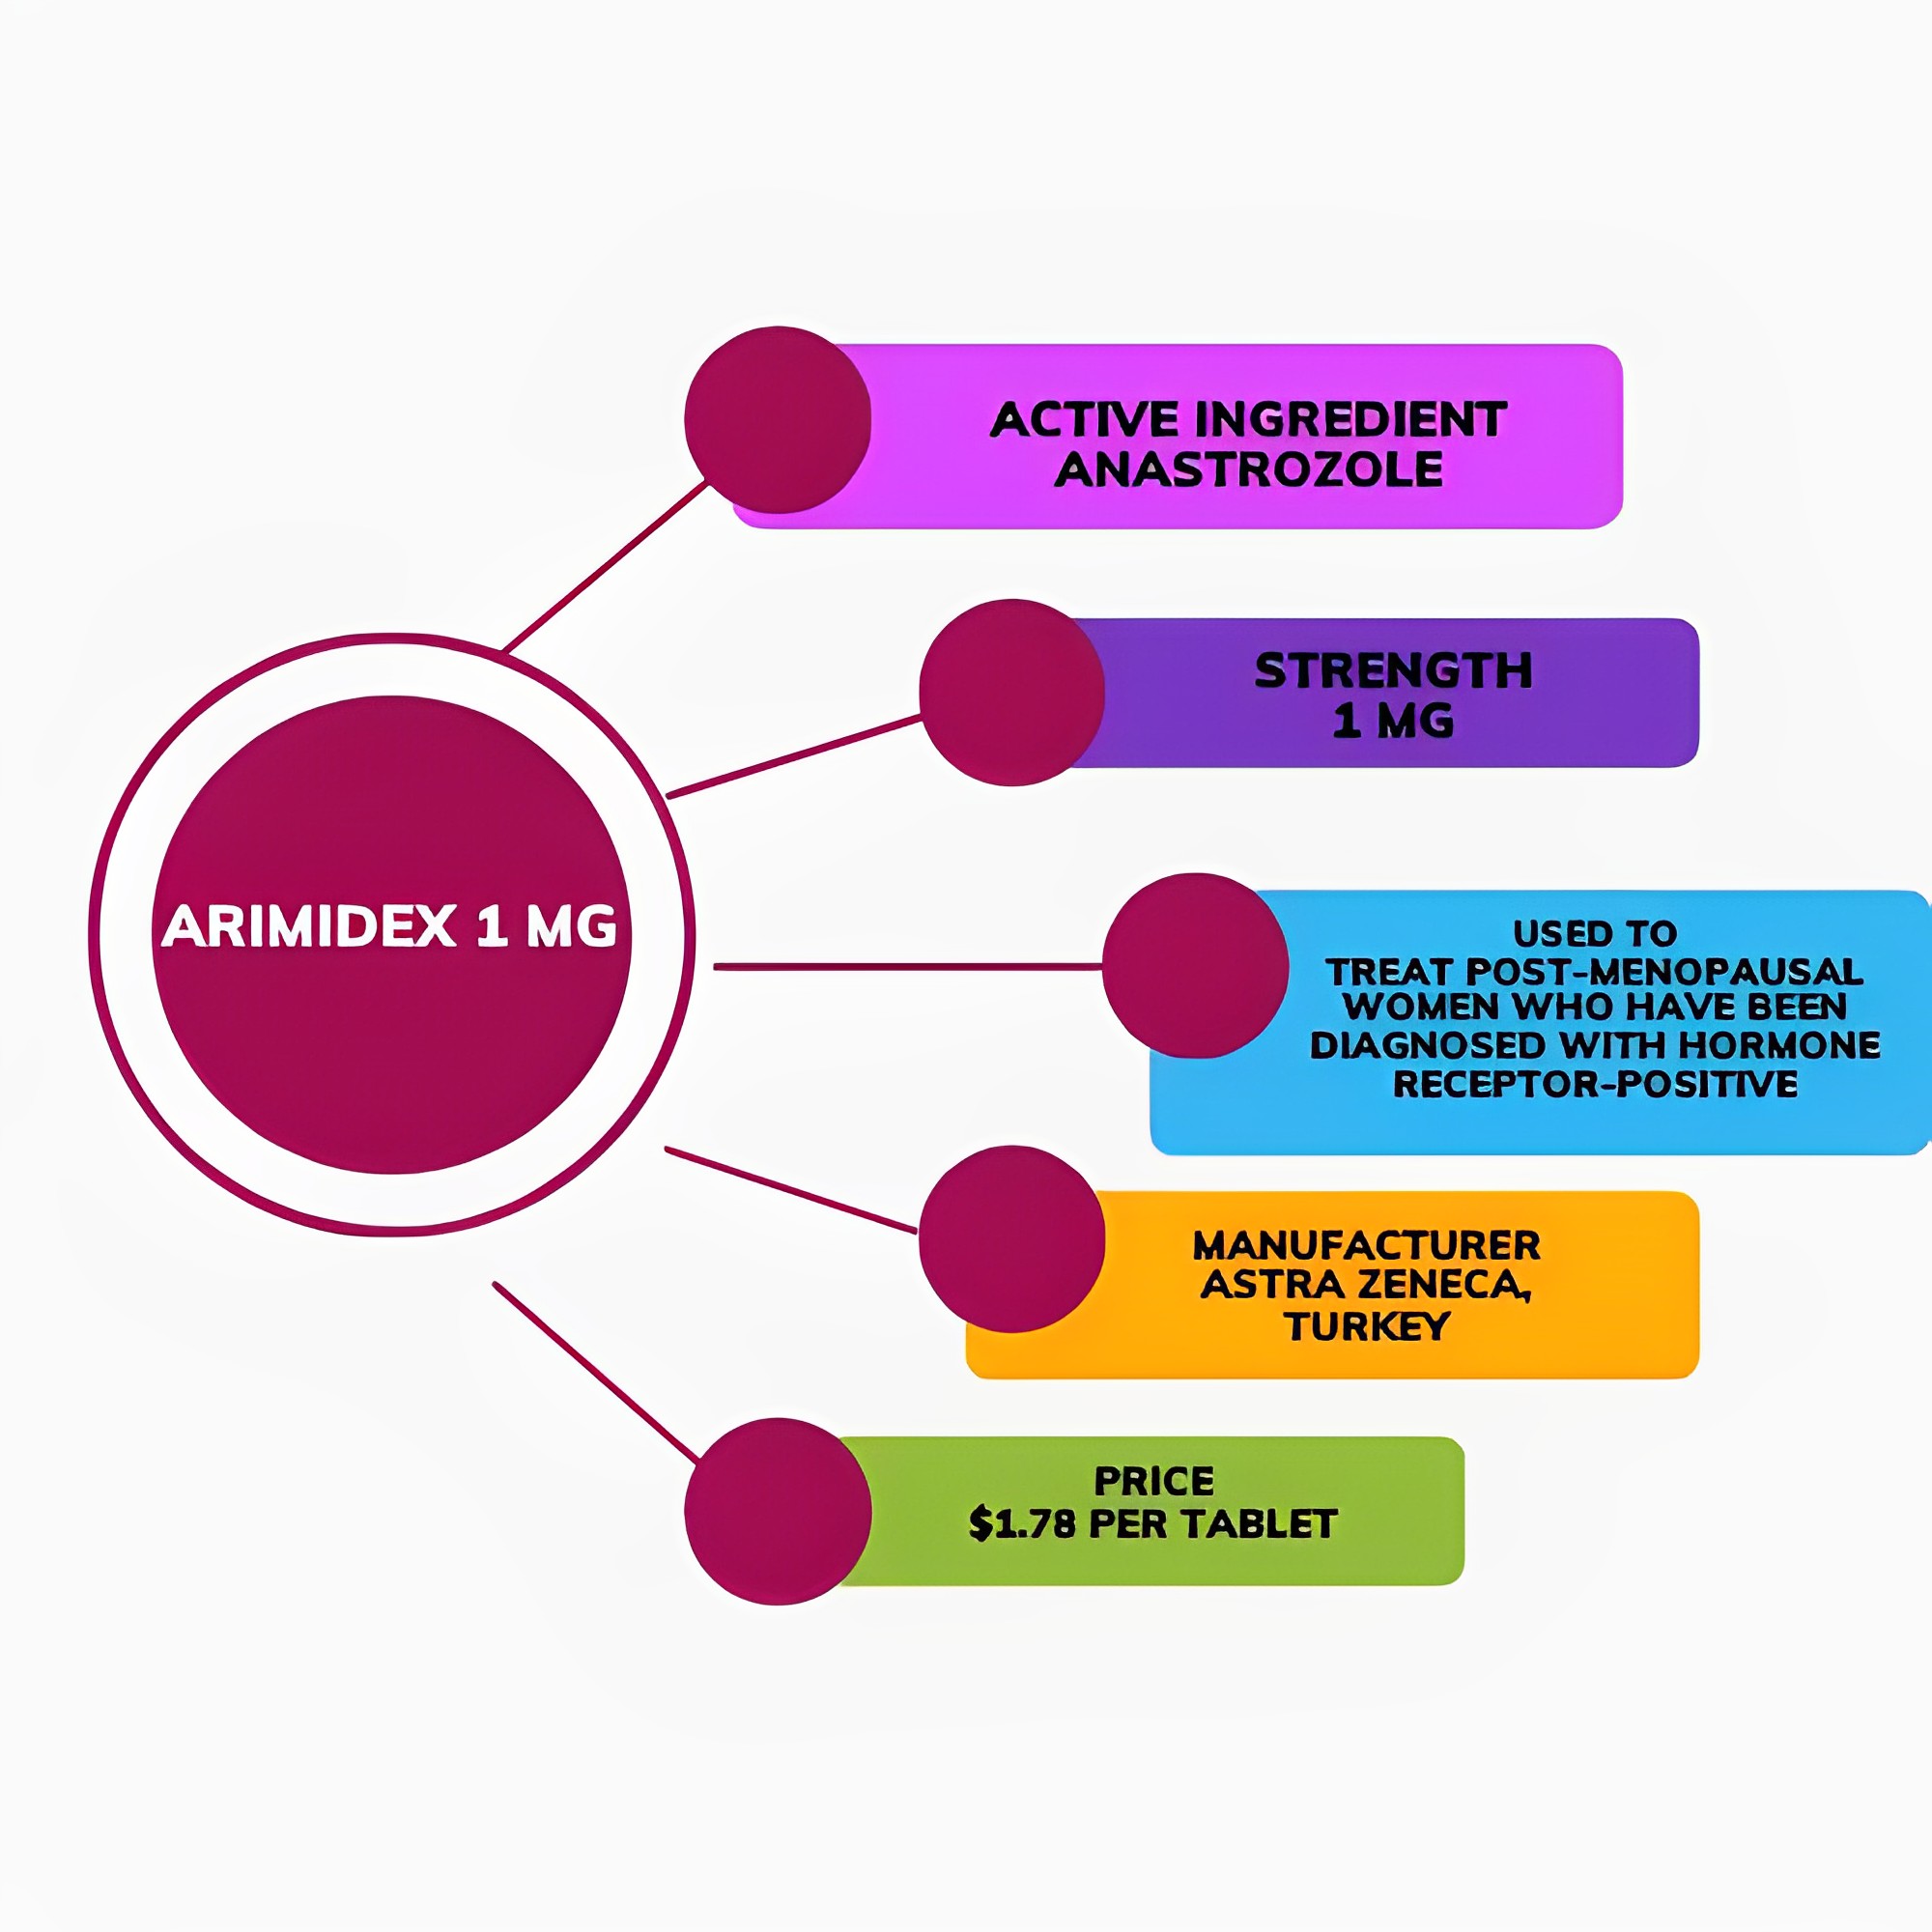 Arimidex 1 mg Image Guide